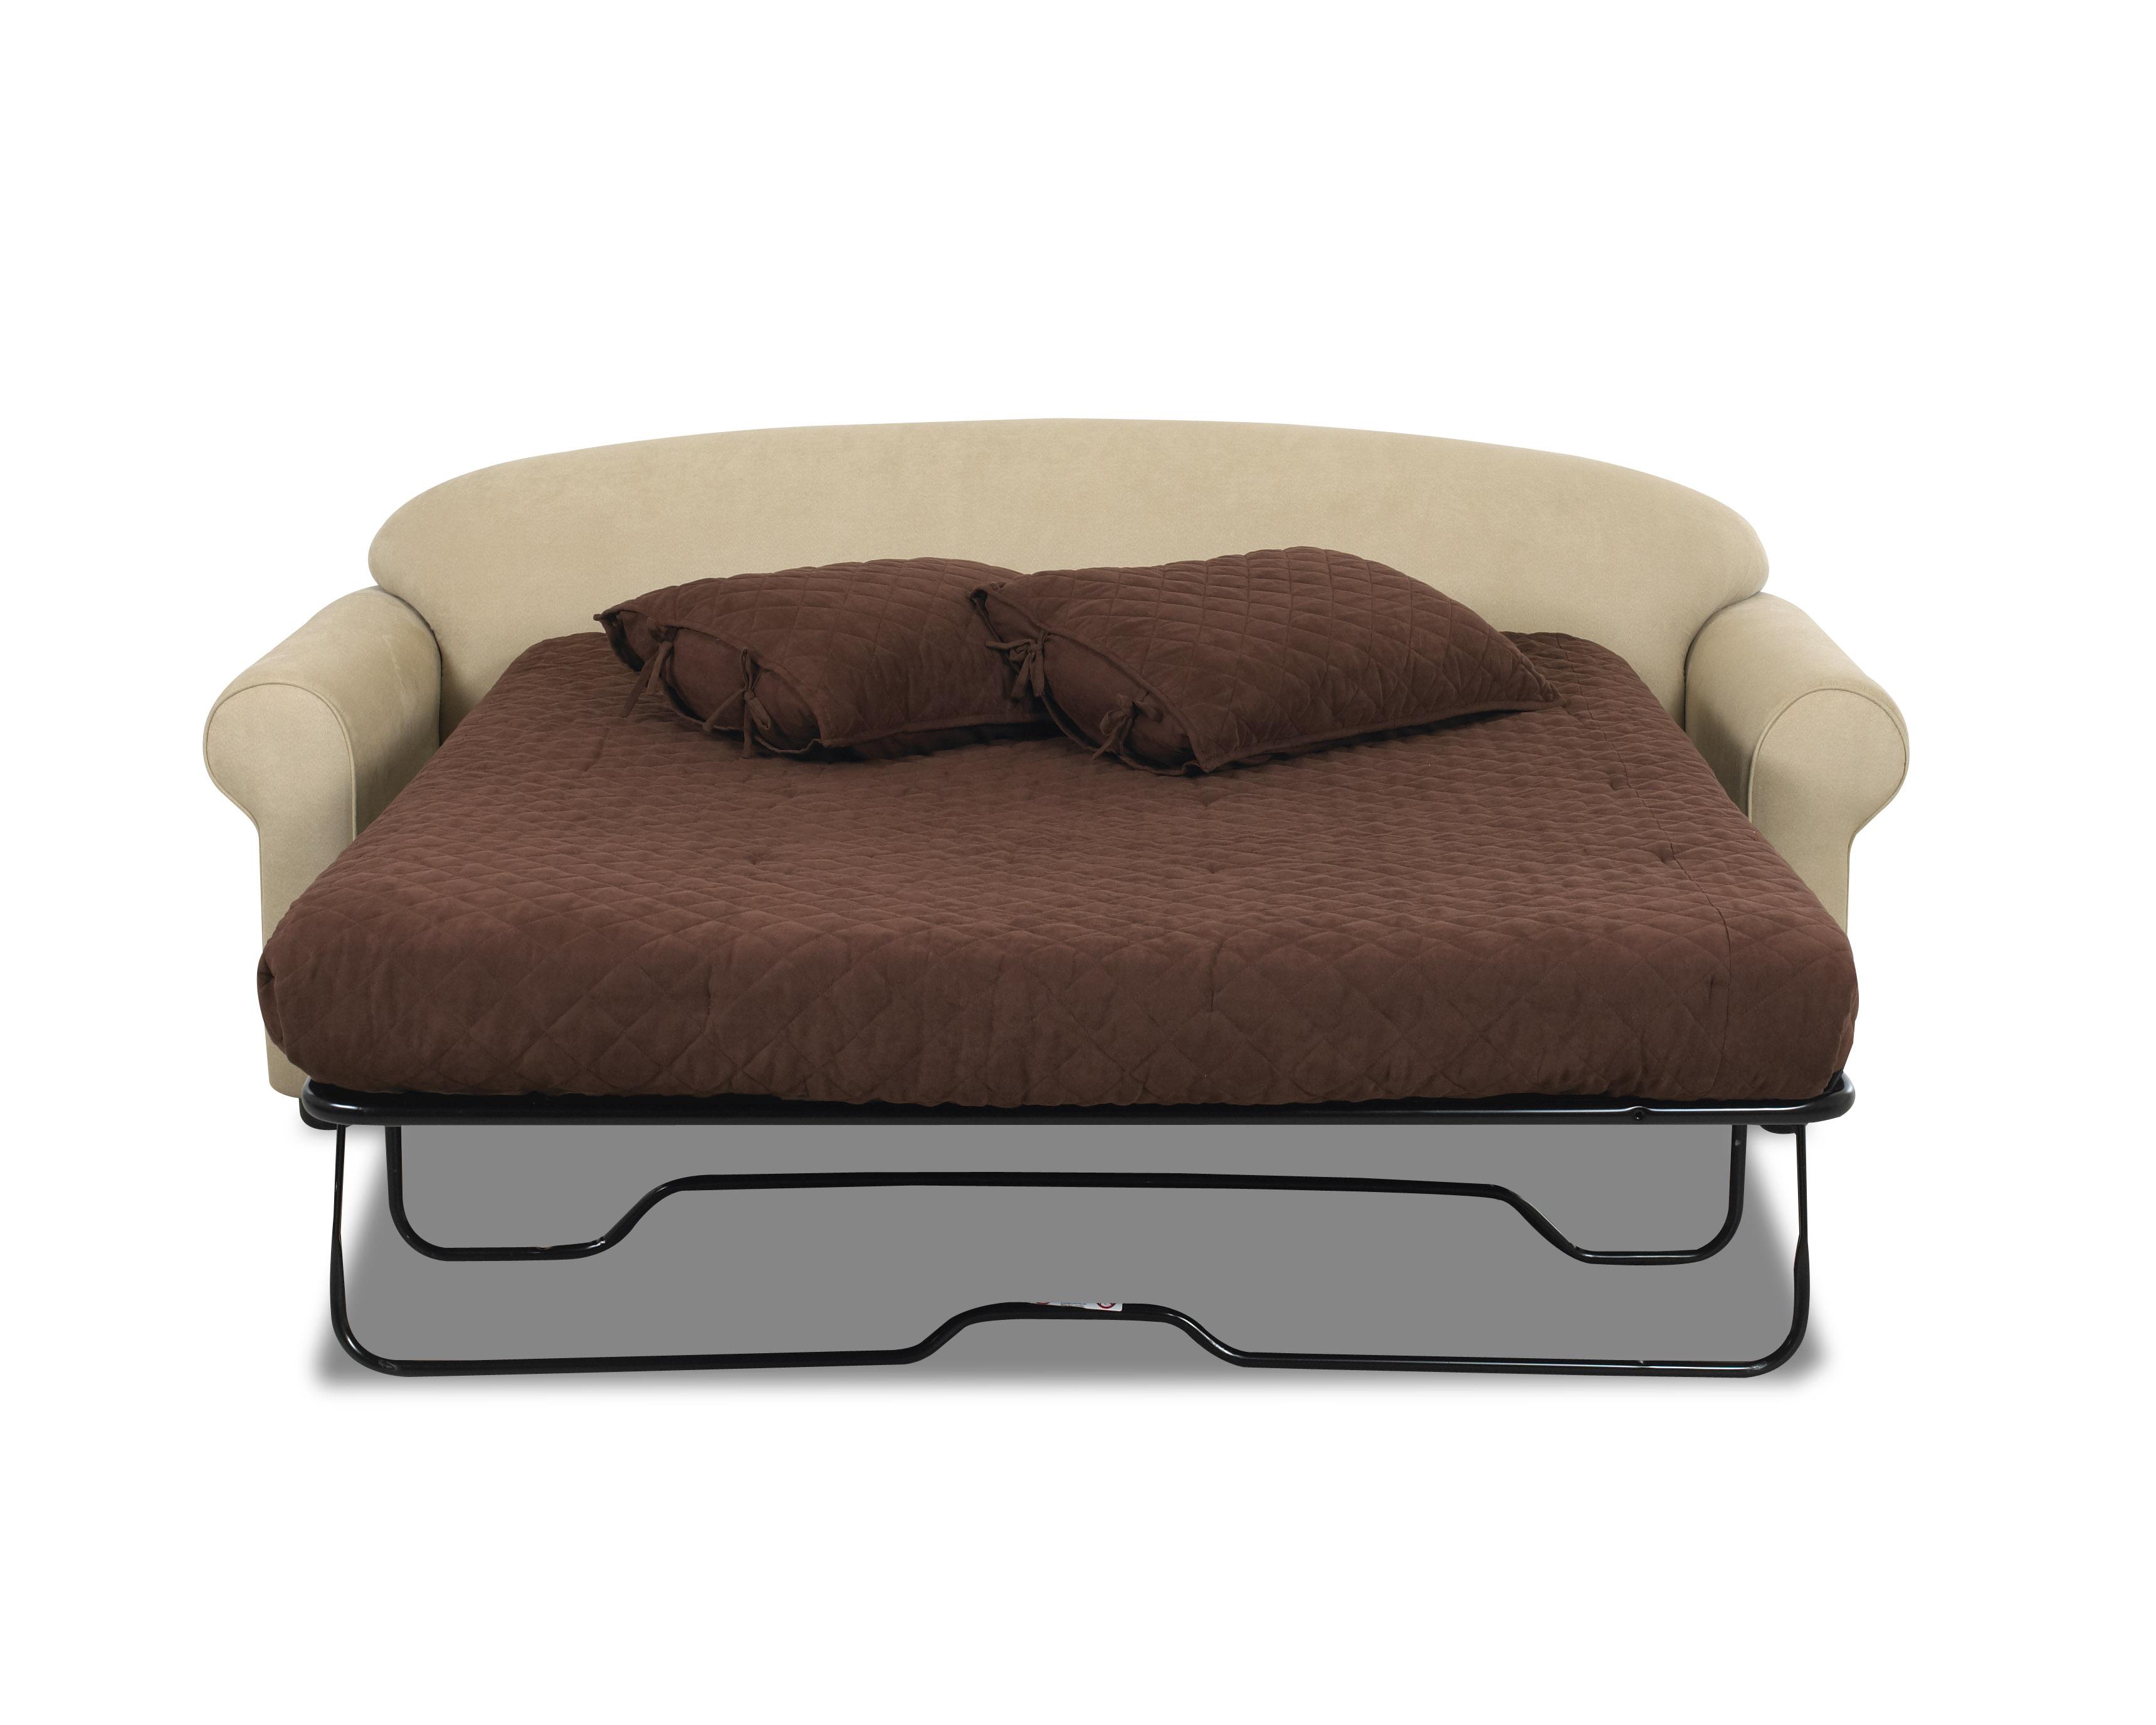 Sleeper sofas Klausner Possibilities Queen sleeper sofa |  Valuable street furniture |  EMERGENCY sleeper